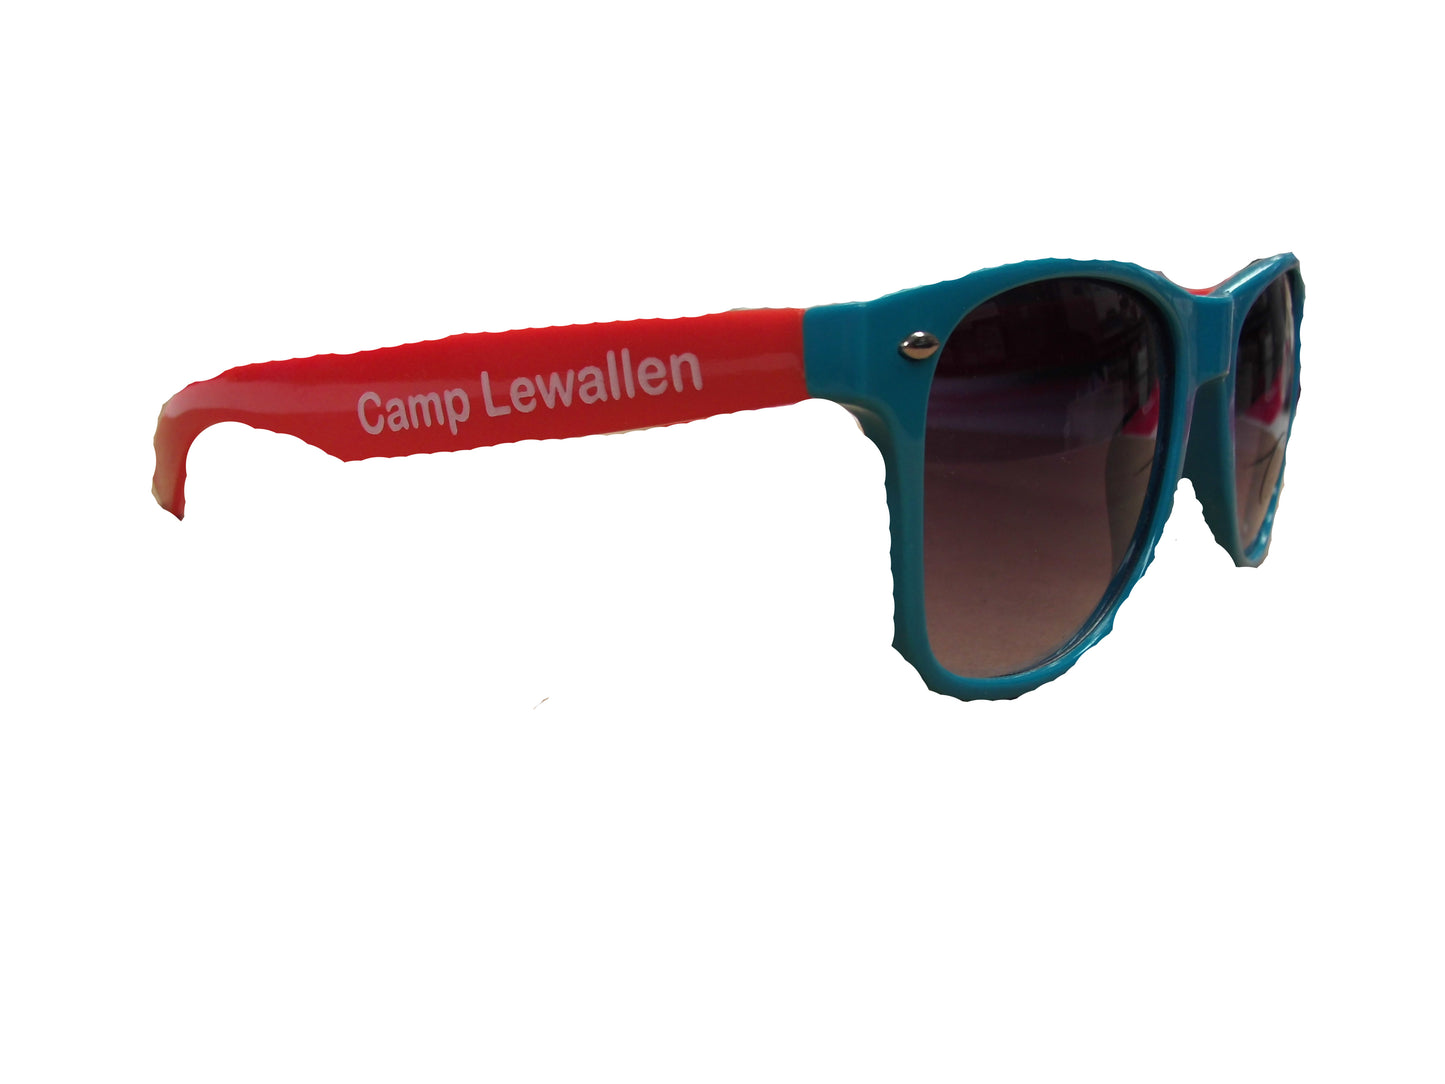 Sunglasses - Camp Lewallen